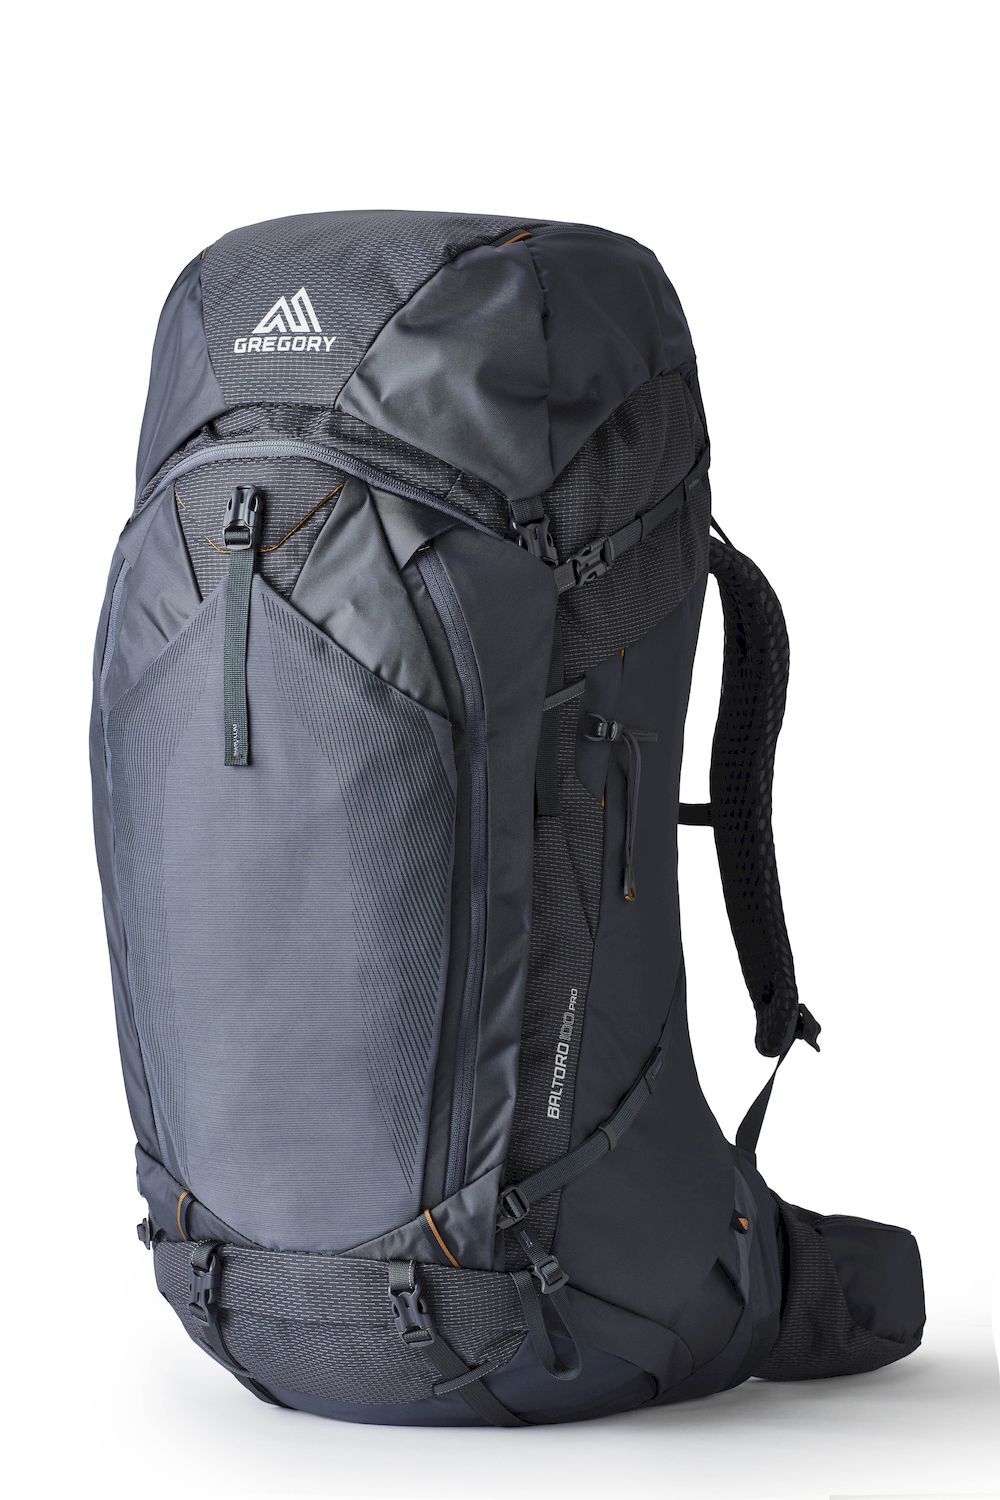 Gregory Baltoro 100 Pro - Hiking backpack - Men's